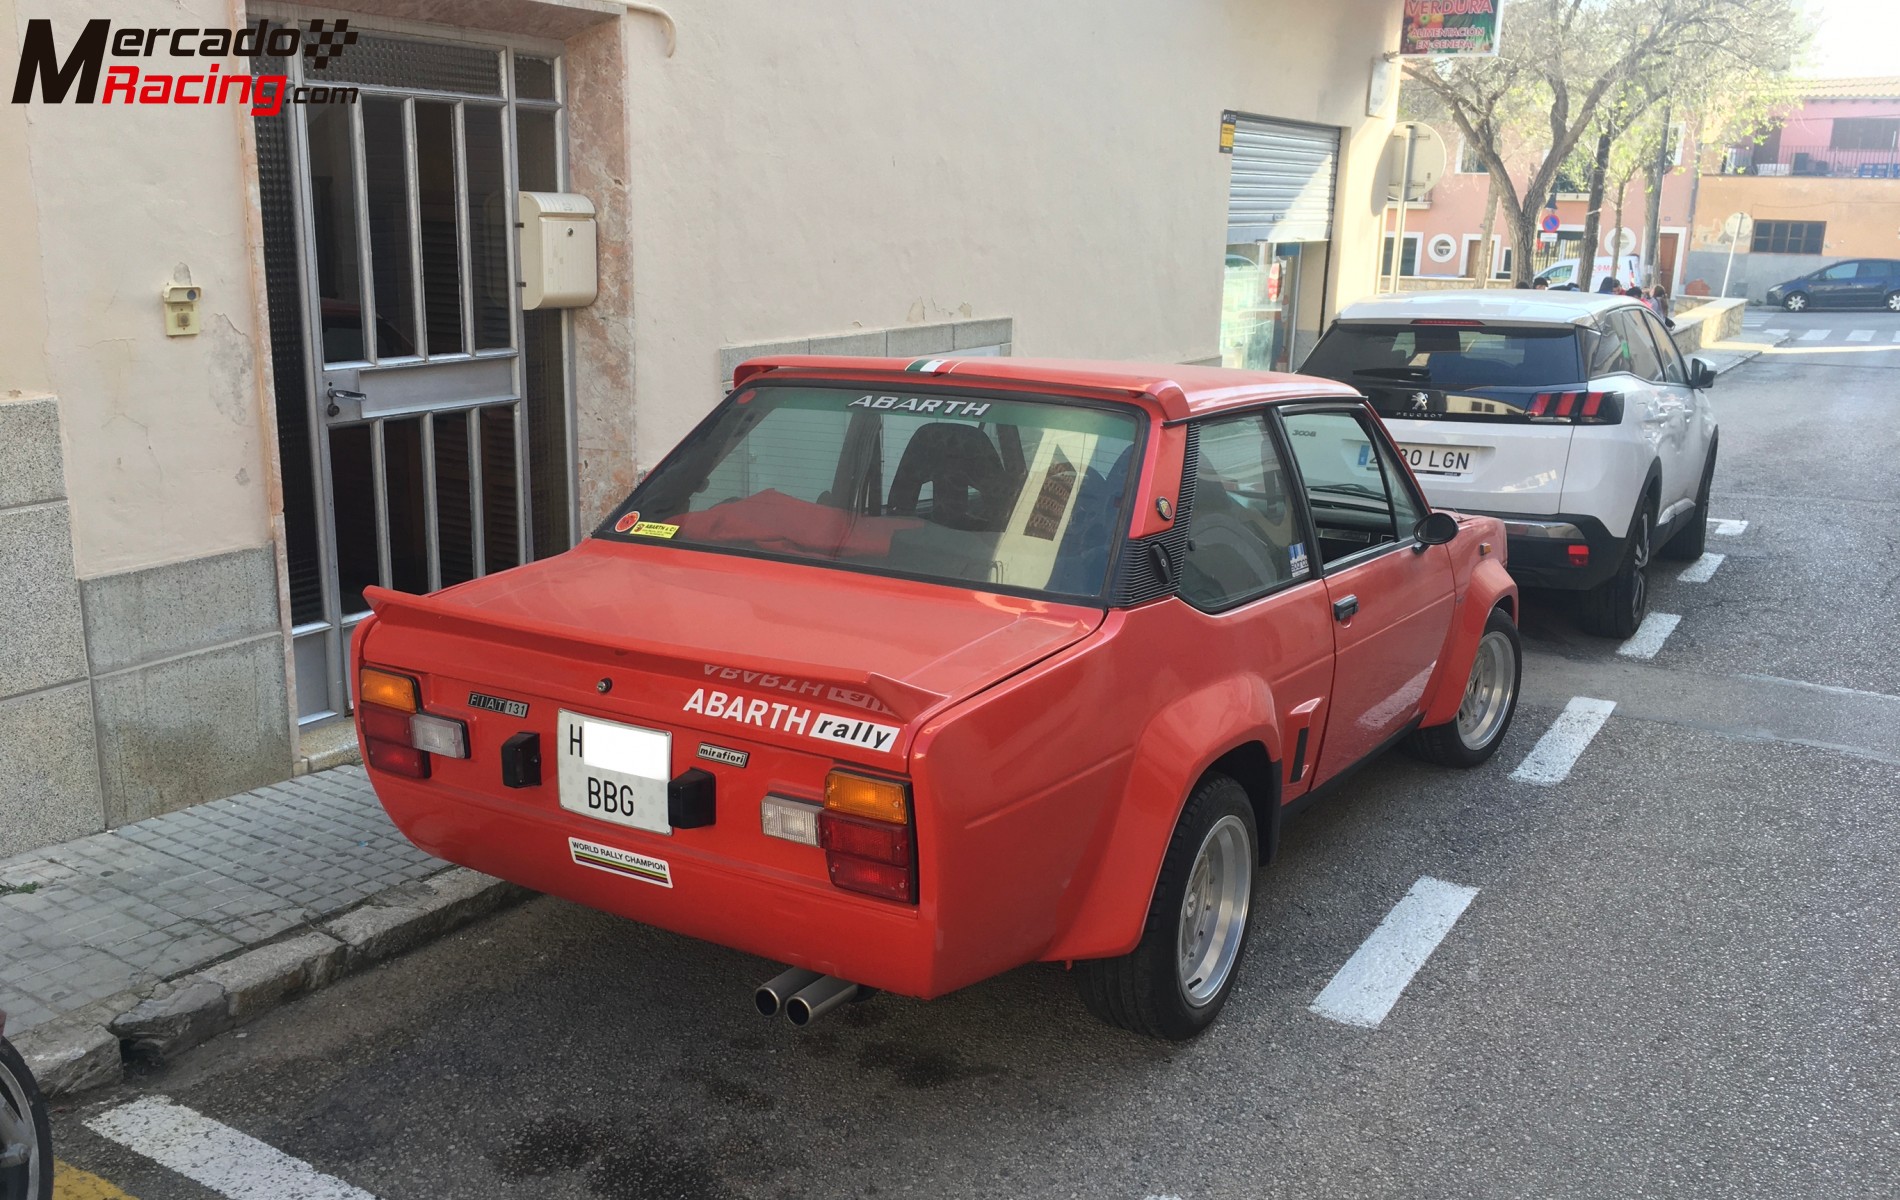 Fiat 131 racing/abarth